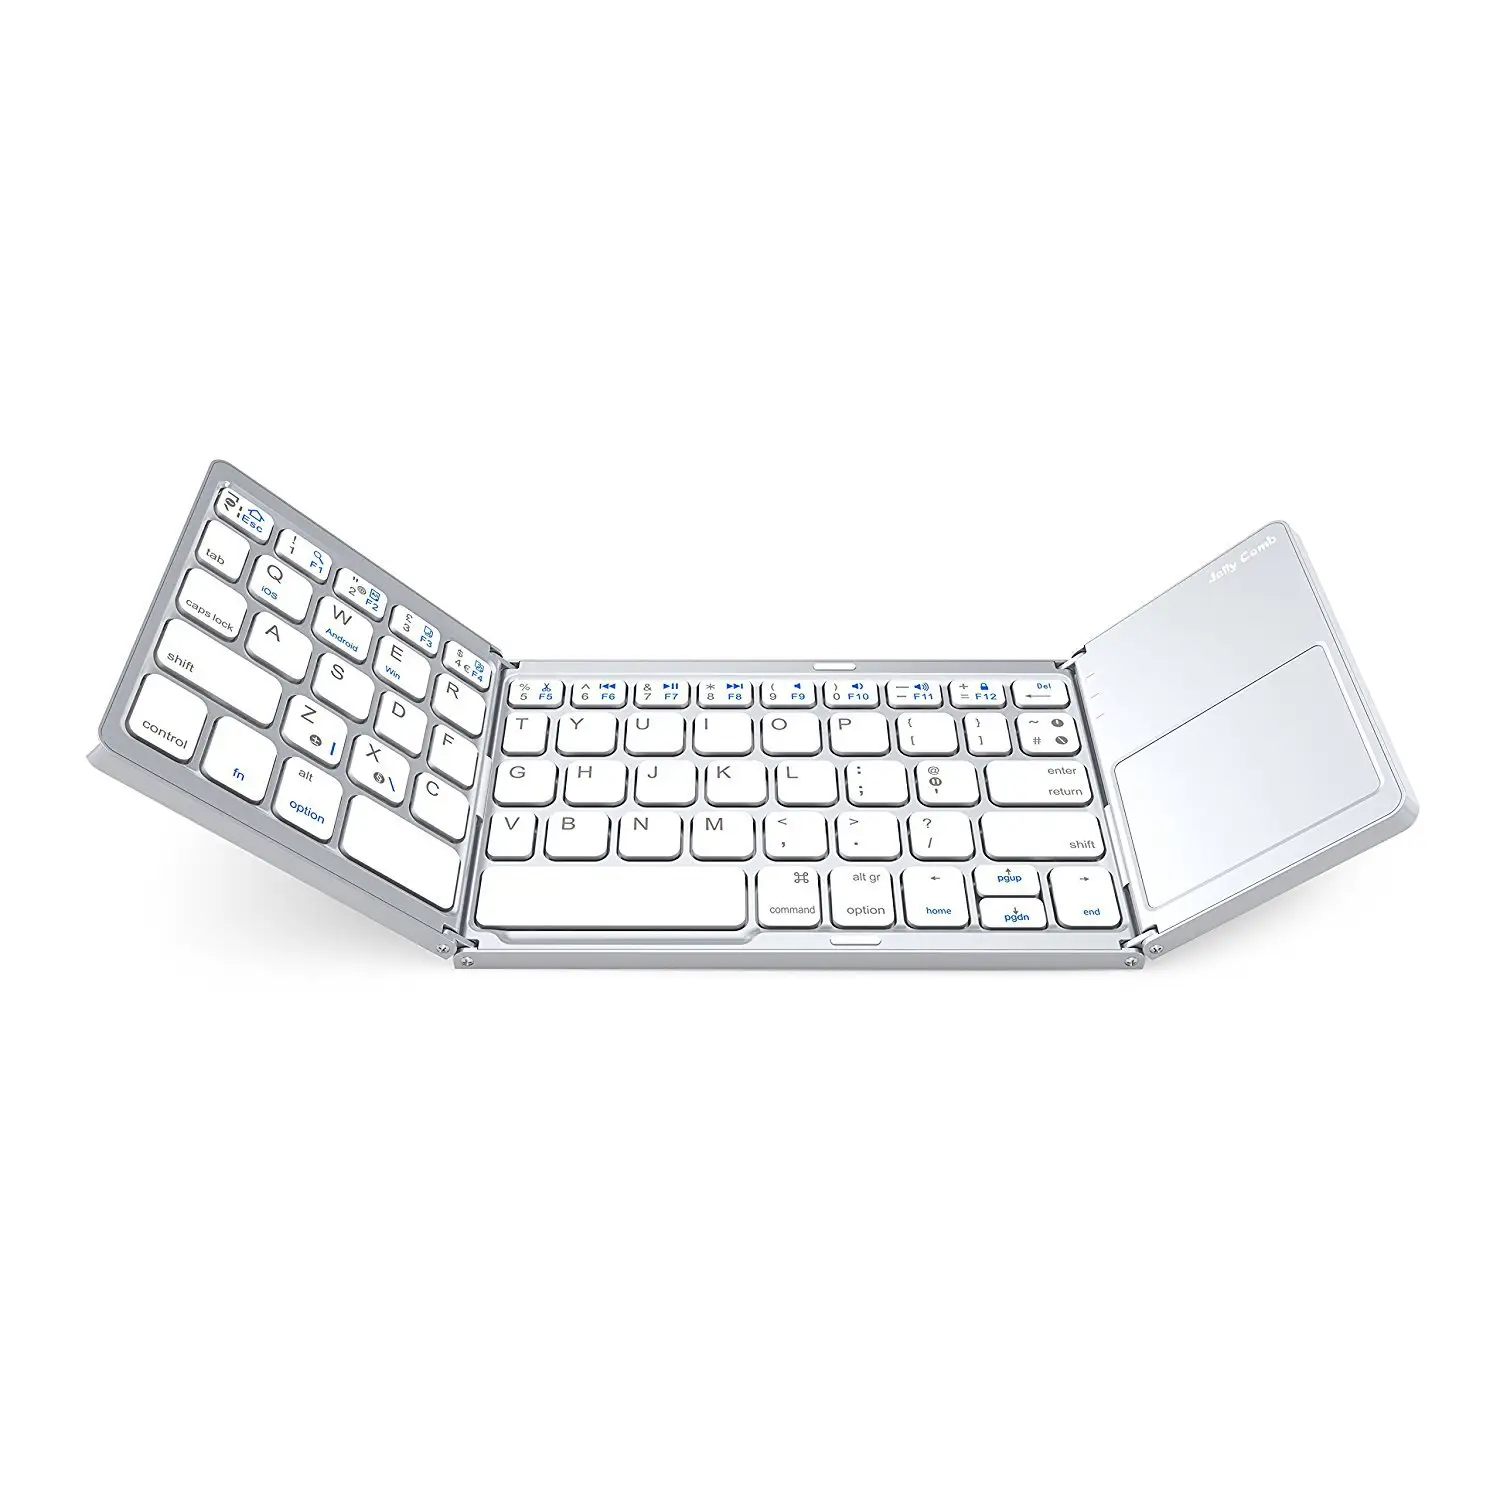 Bluetooth Lipat Mini ABS, Keyboard Touchpad Nirkabel 2.4G Lipat untuk Laptop Ipad